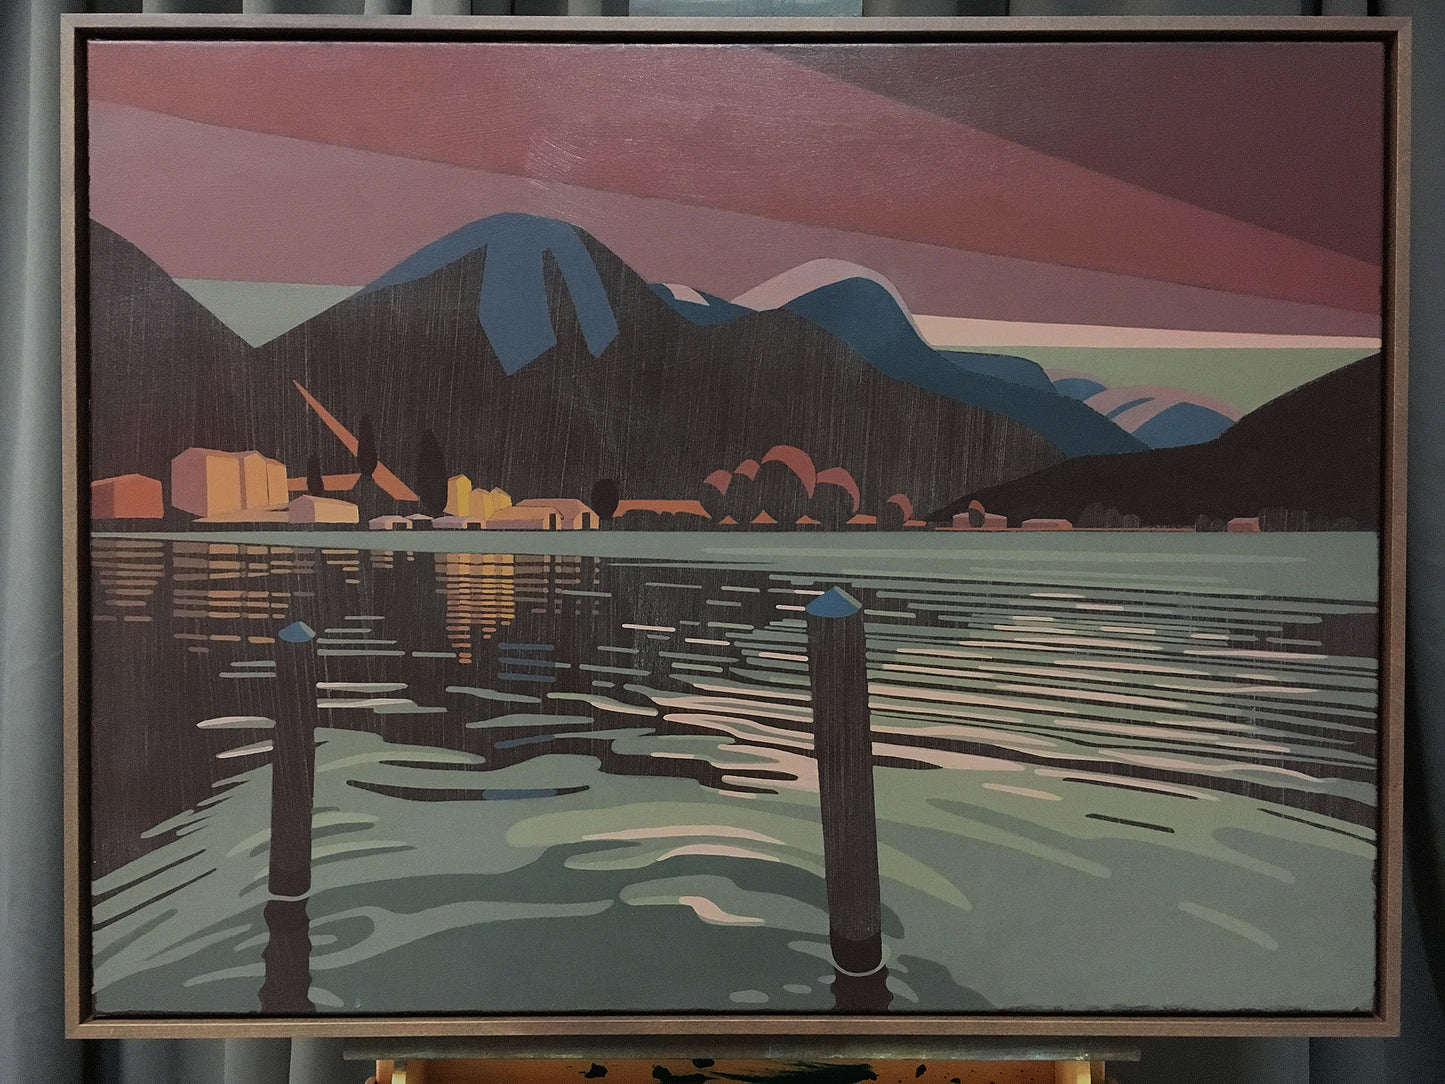 Lake view, unique, painting, hand-painted unique piece, 90 x 70 cm, with frame